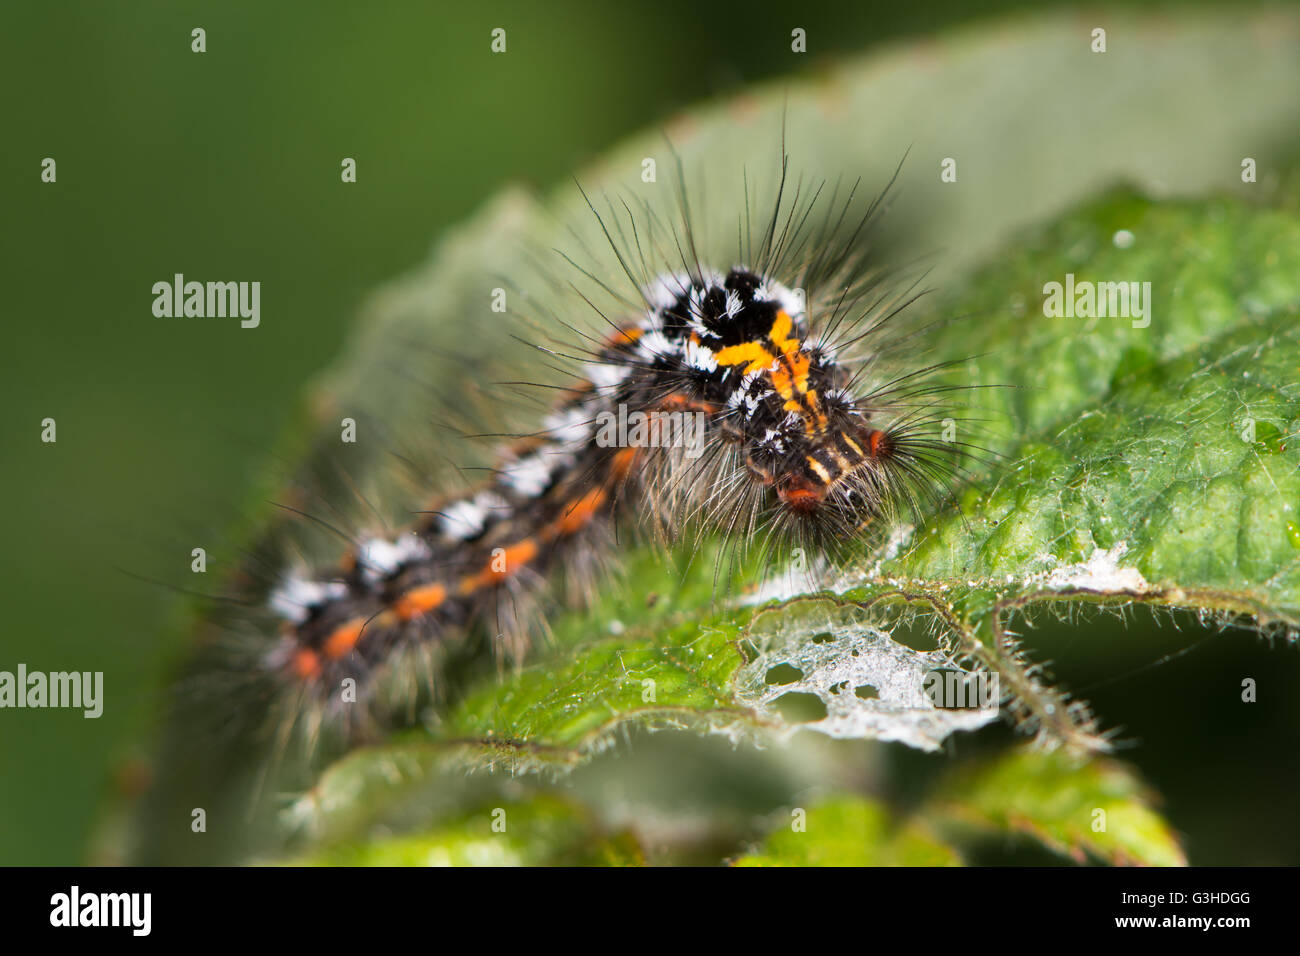 La polilla de cola amarilla (Euproctis similis) Caterpillar. La larva de la polilla de la familia Erebidae (anteriormente Lymantriidae) cubierto de vello Foto de stock